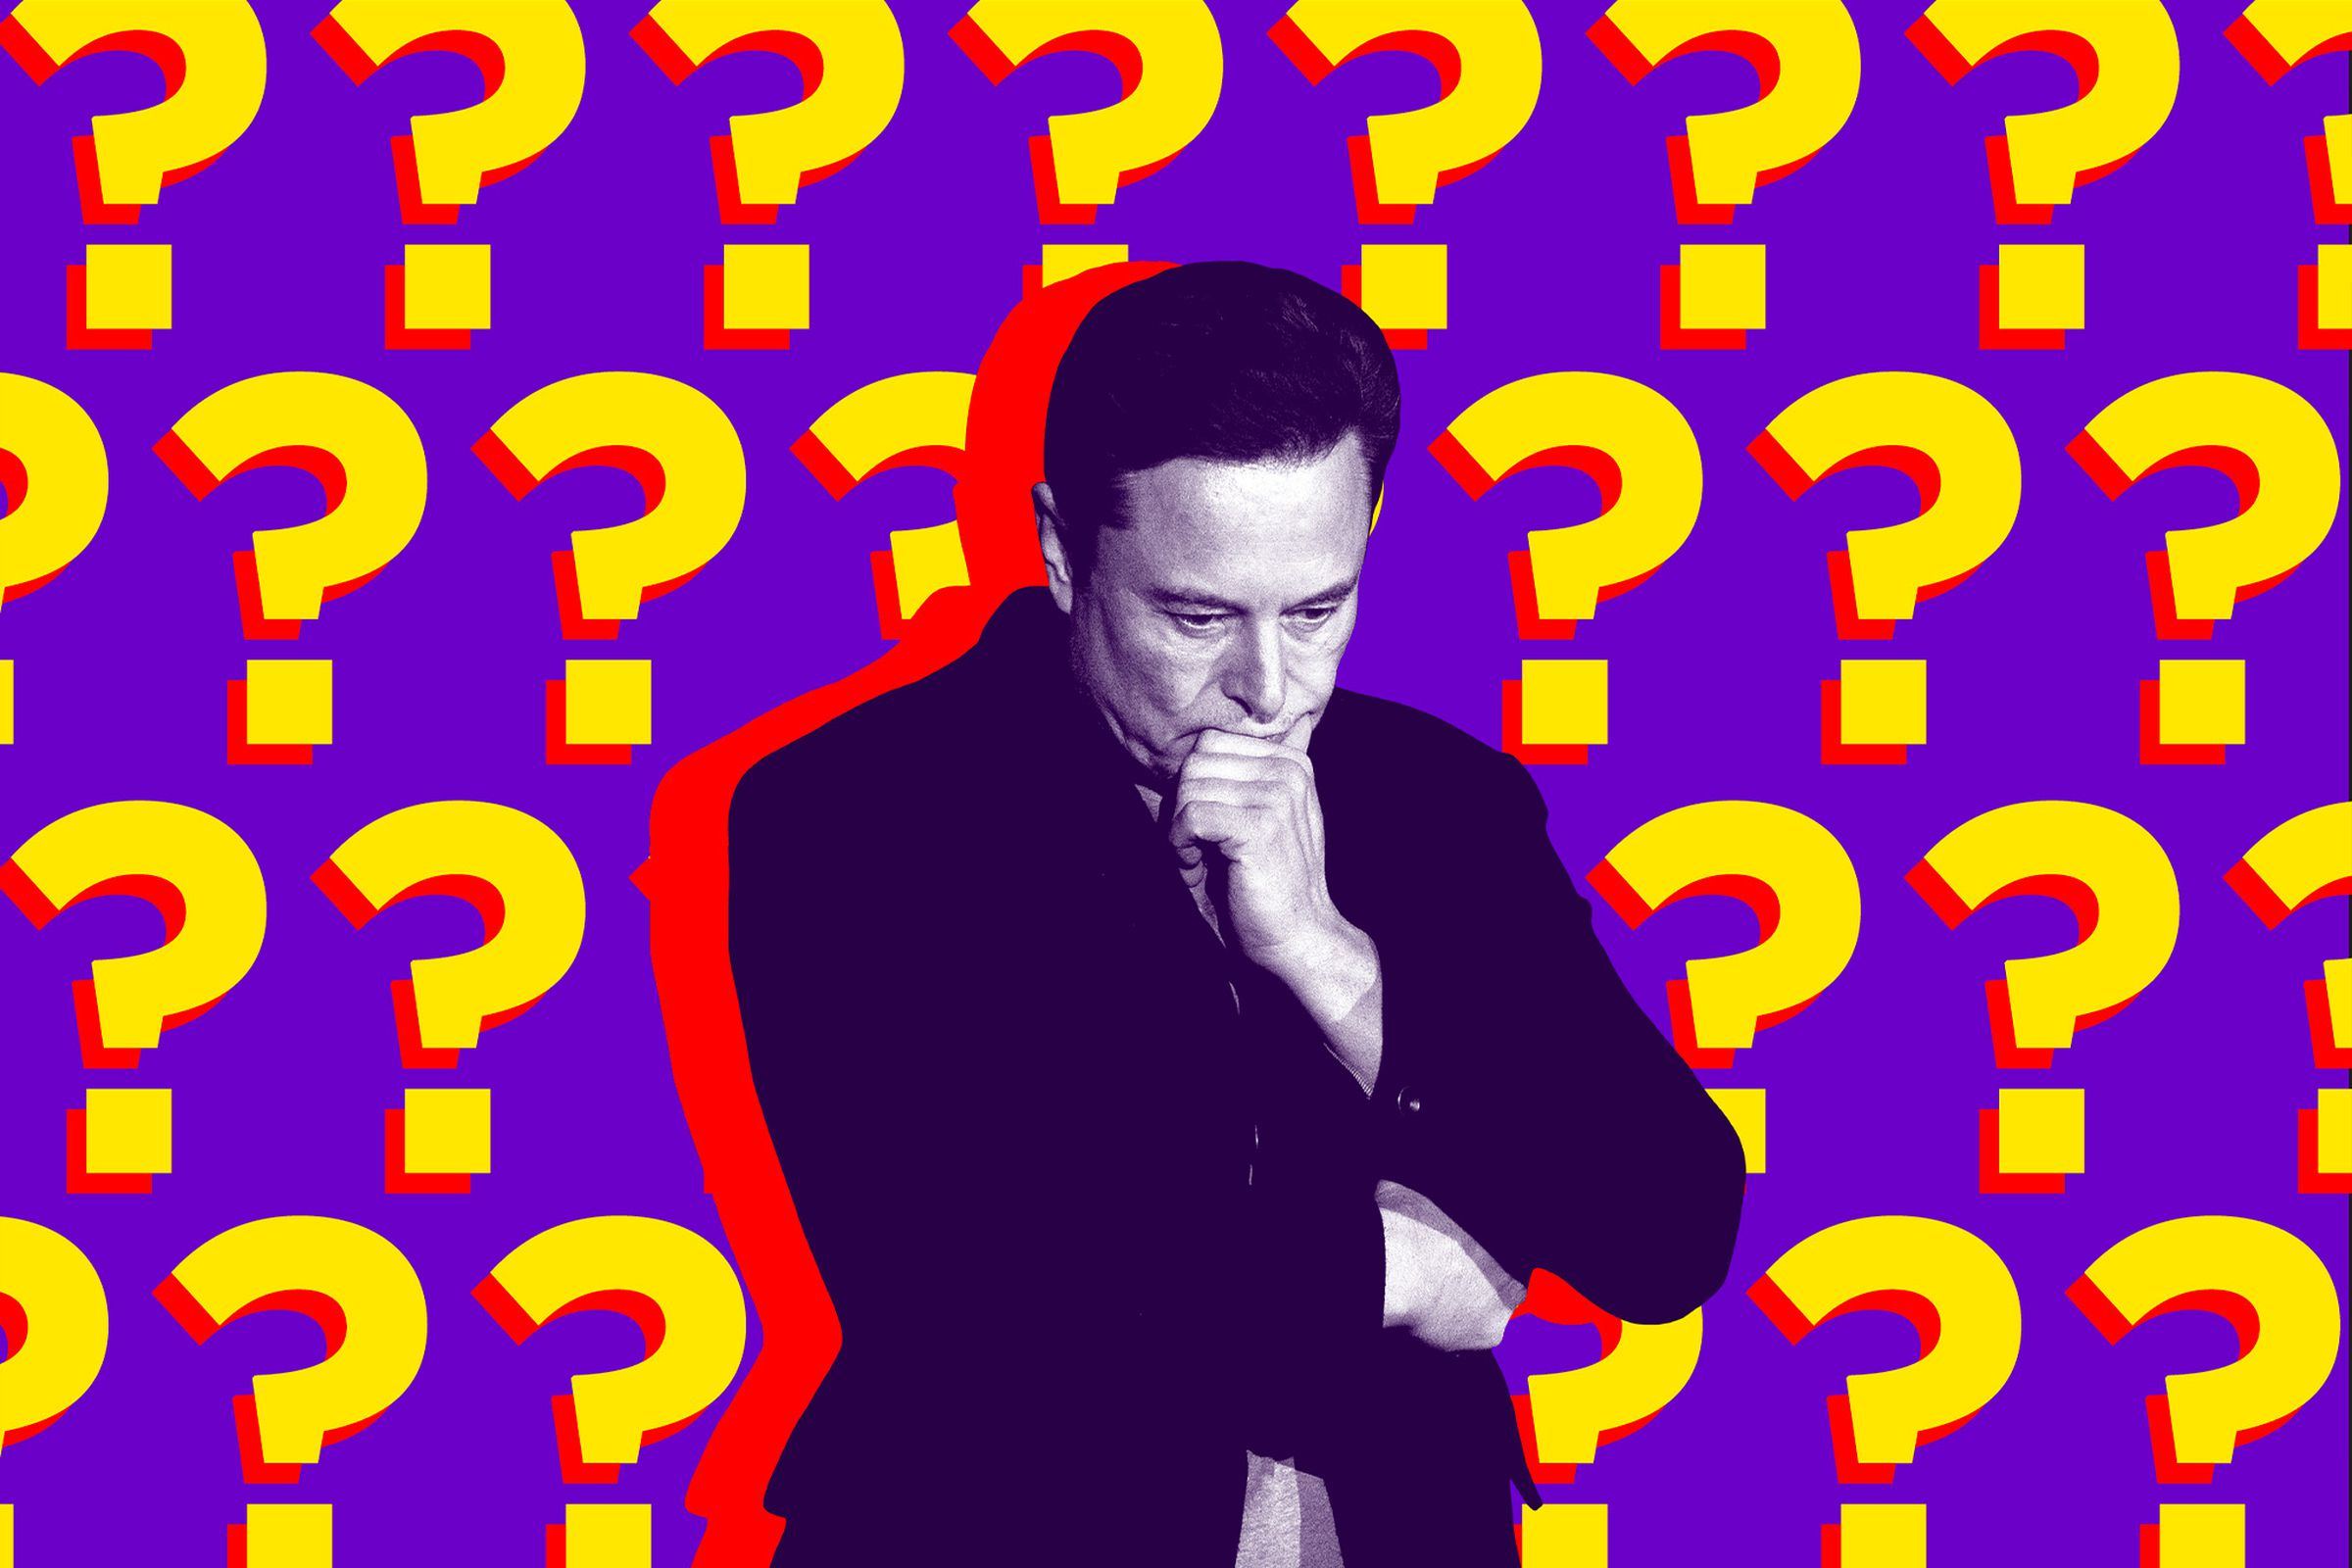 Elon Musk with question mark wallpaper